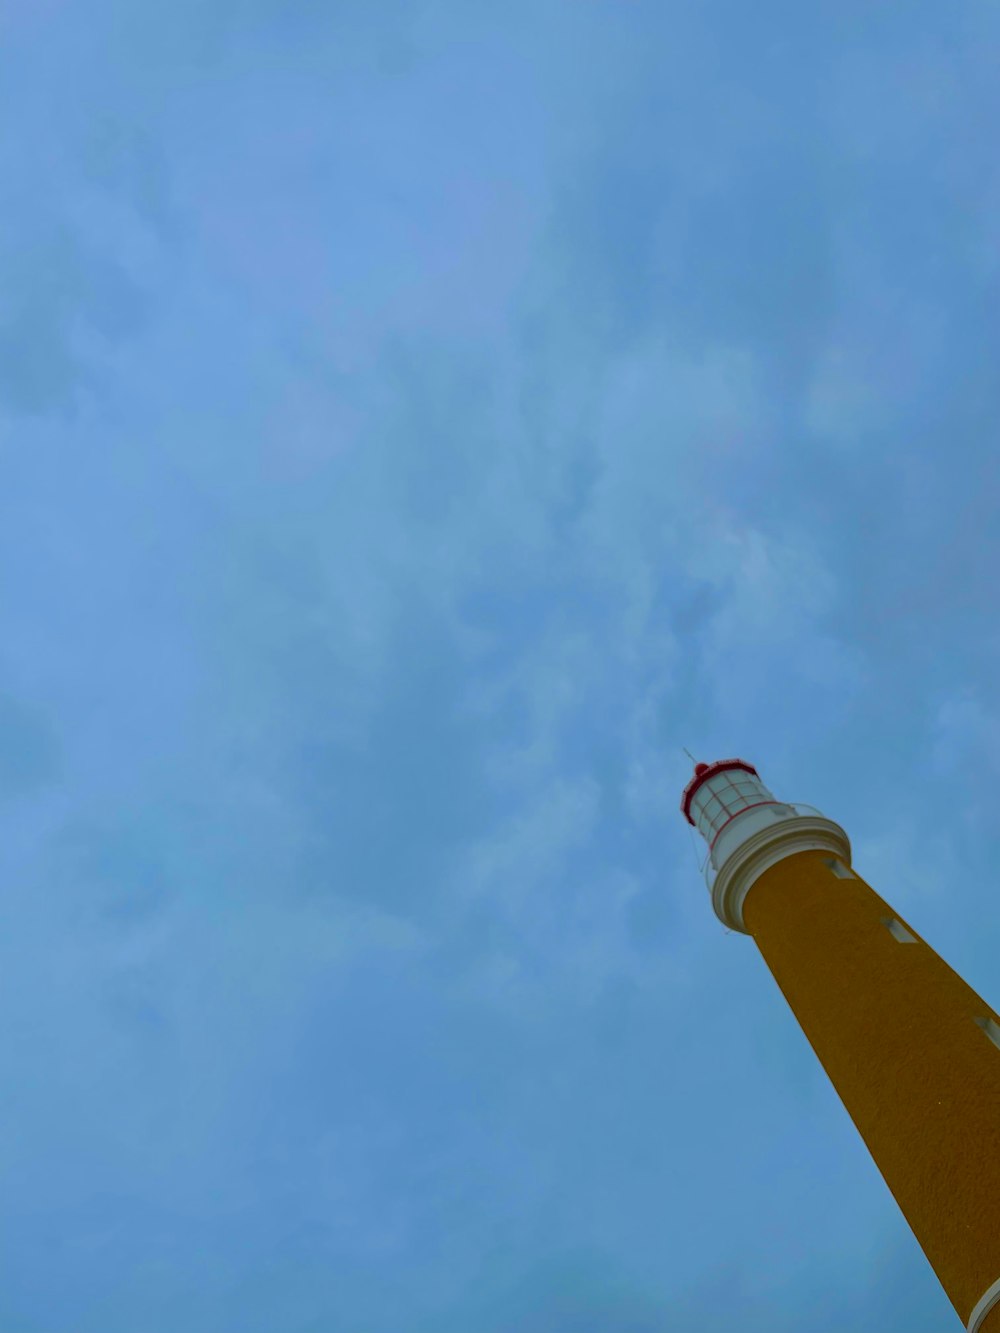 a tall light house sitting under a cloudy blue sky